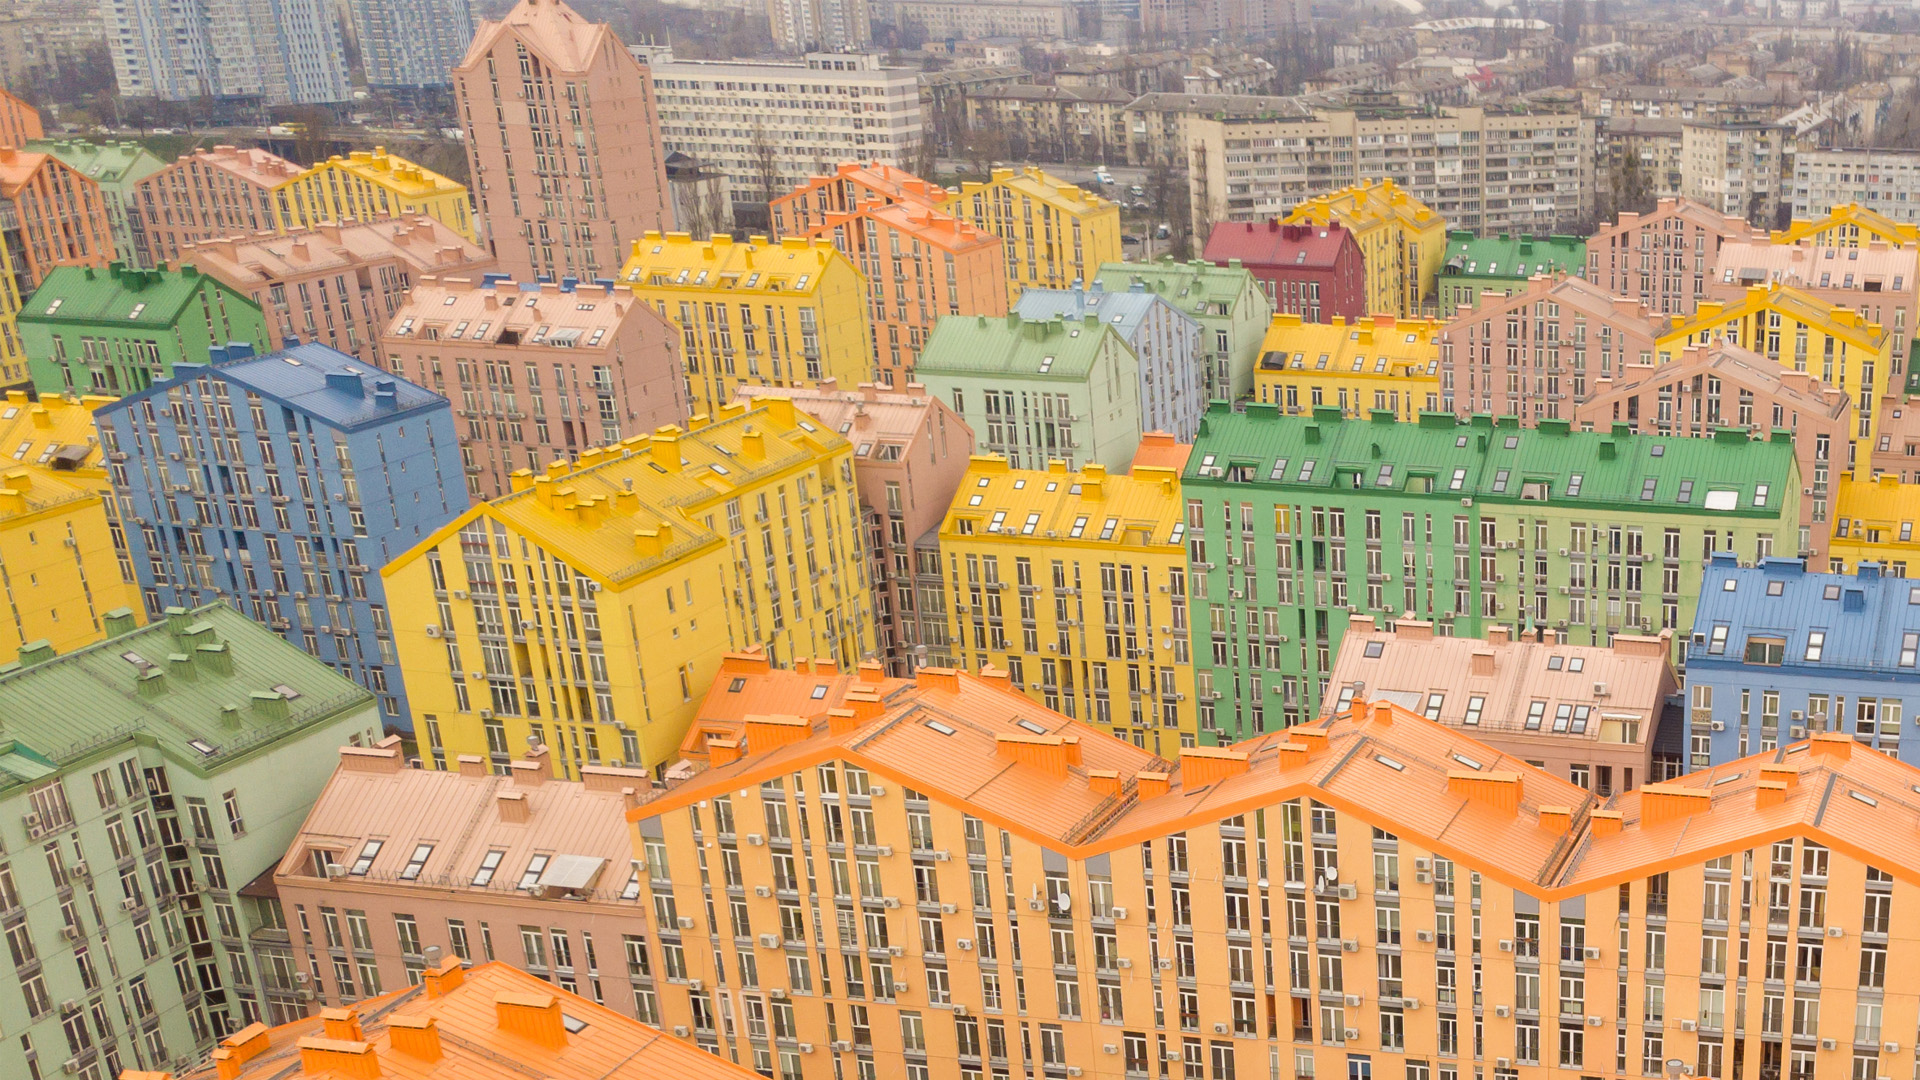 Photo of a housing estate in Kiev